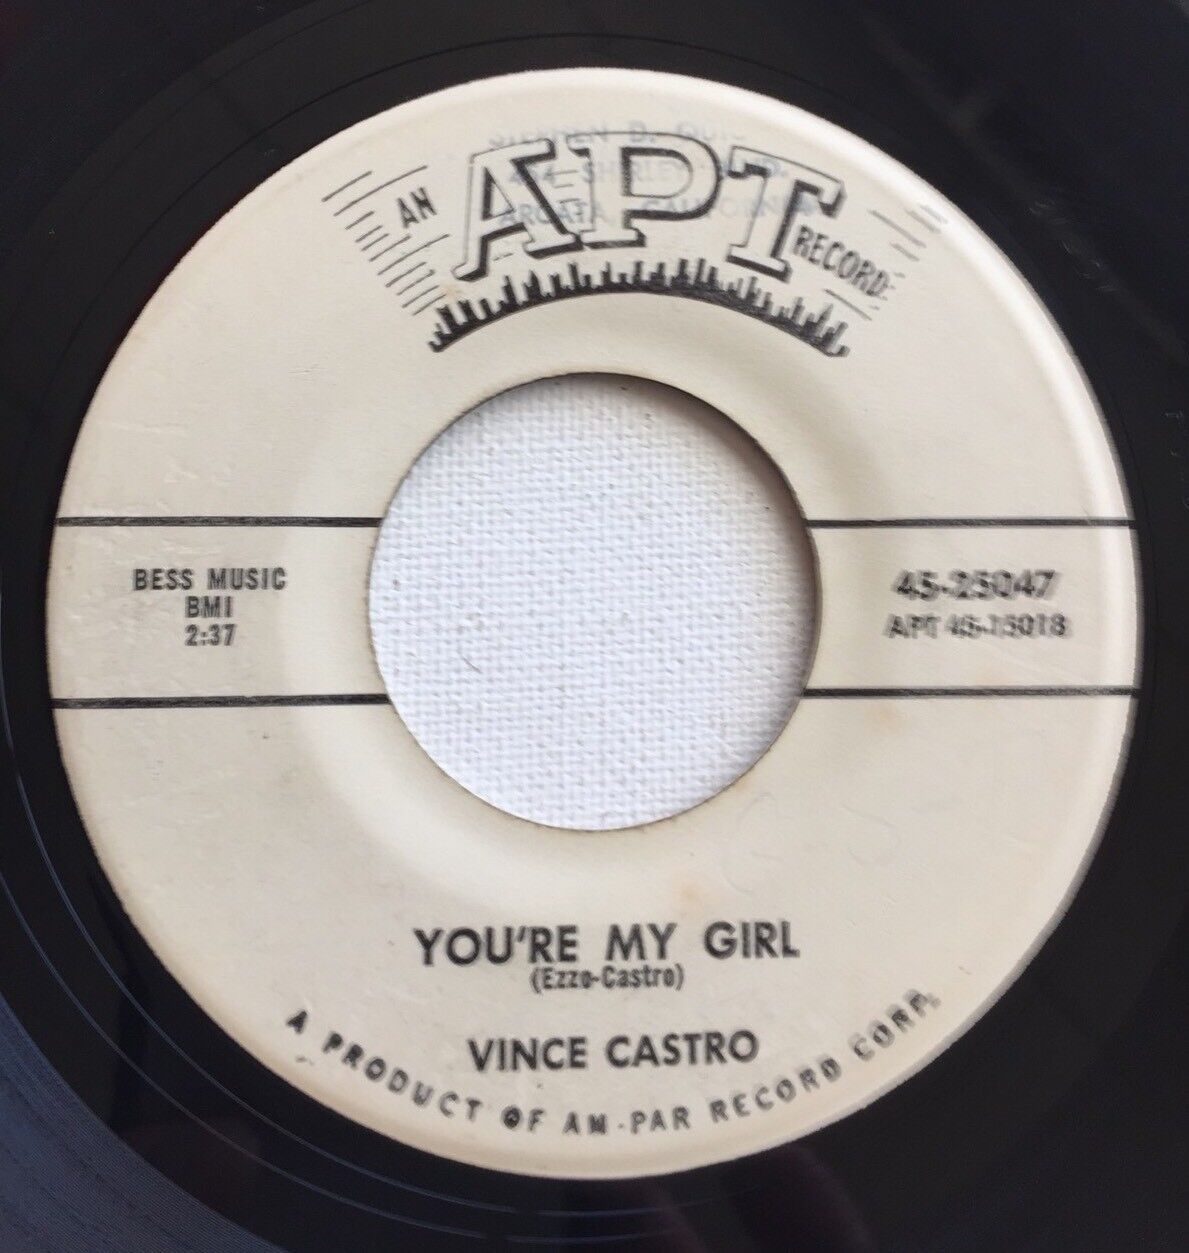 VINCE CASTRO, YOU'RE MY GIRL/BONGO TWIST, APT#25047, PROMO 45 RECORD, 1960